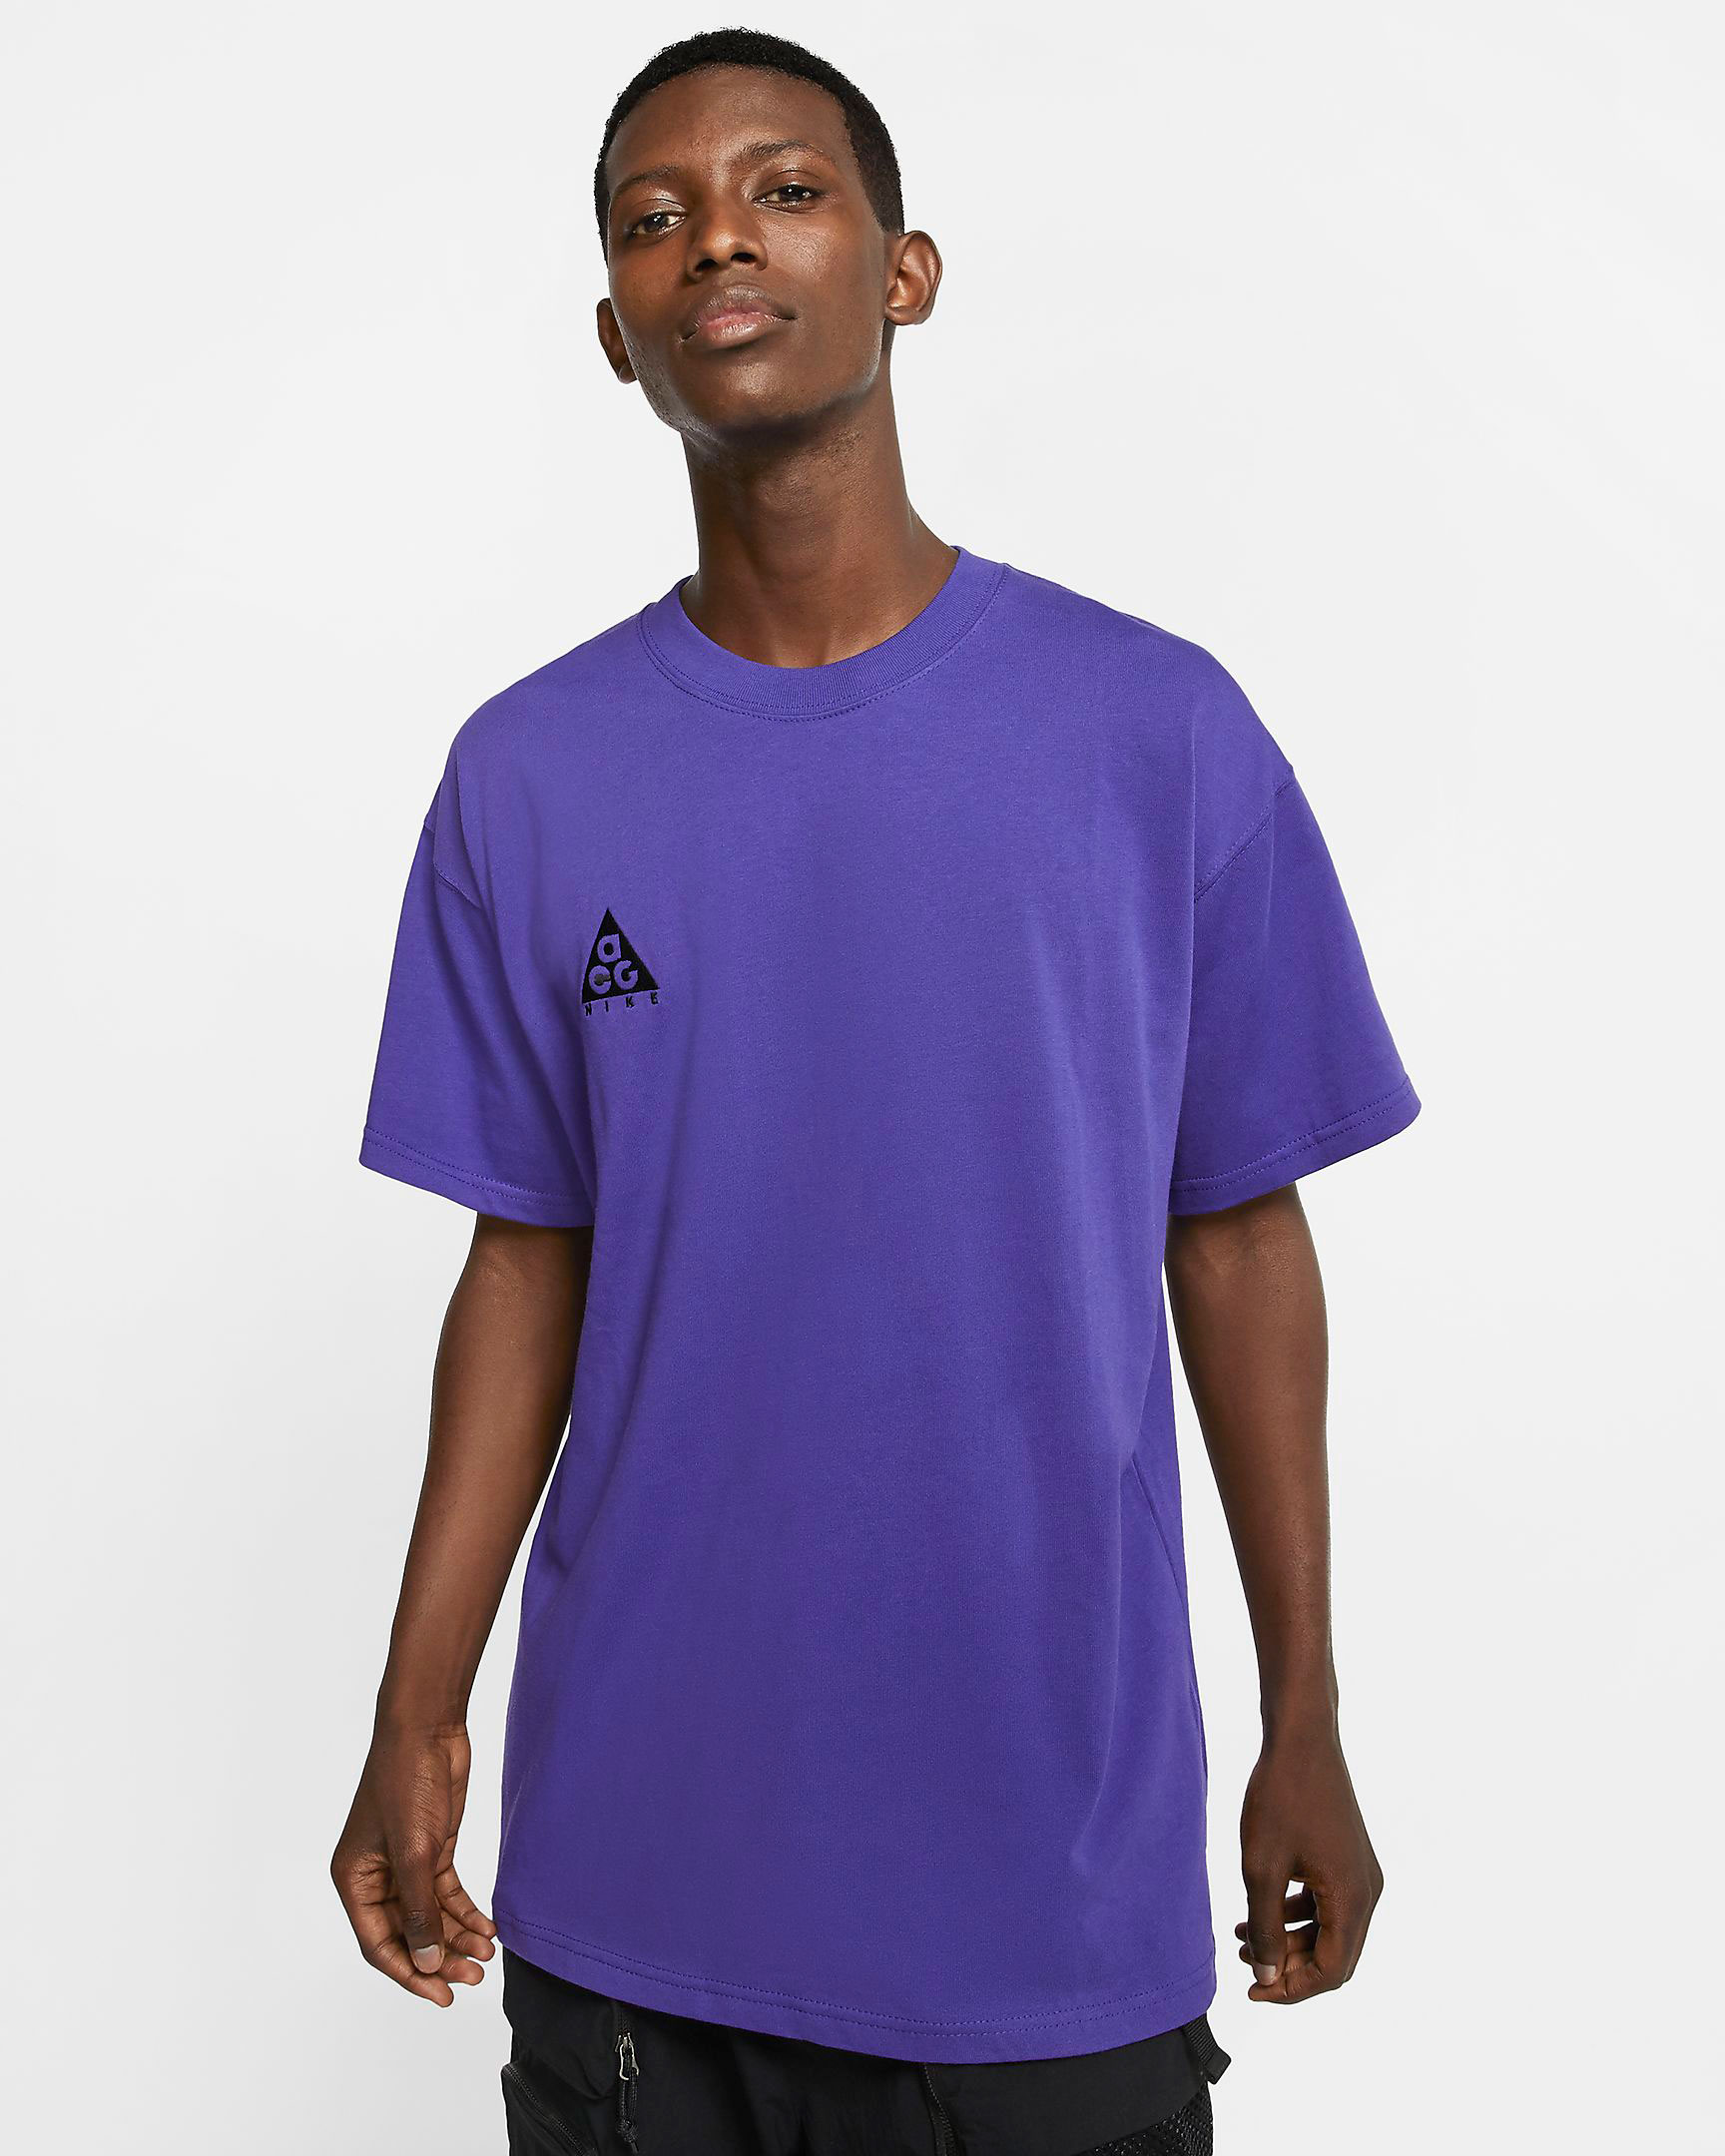 nike-acg-shirt-purple